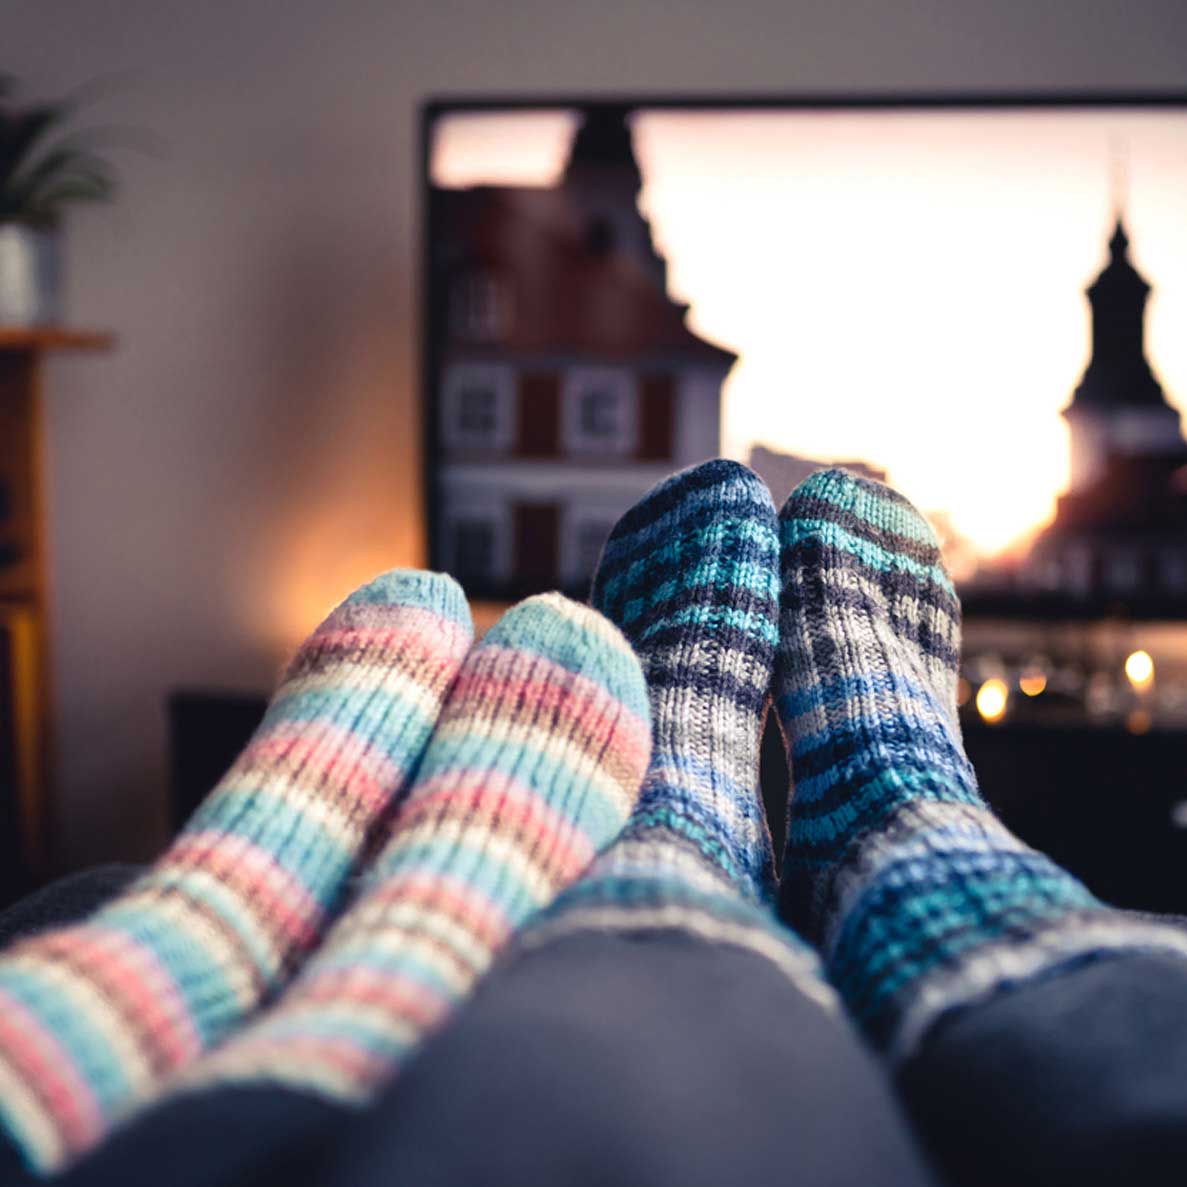 Warm feet, socks